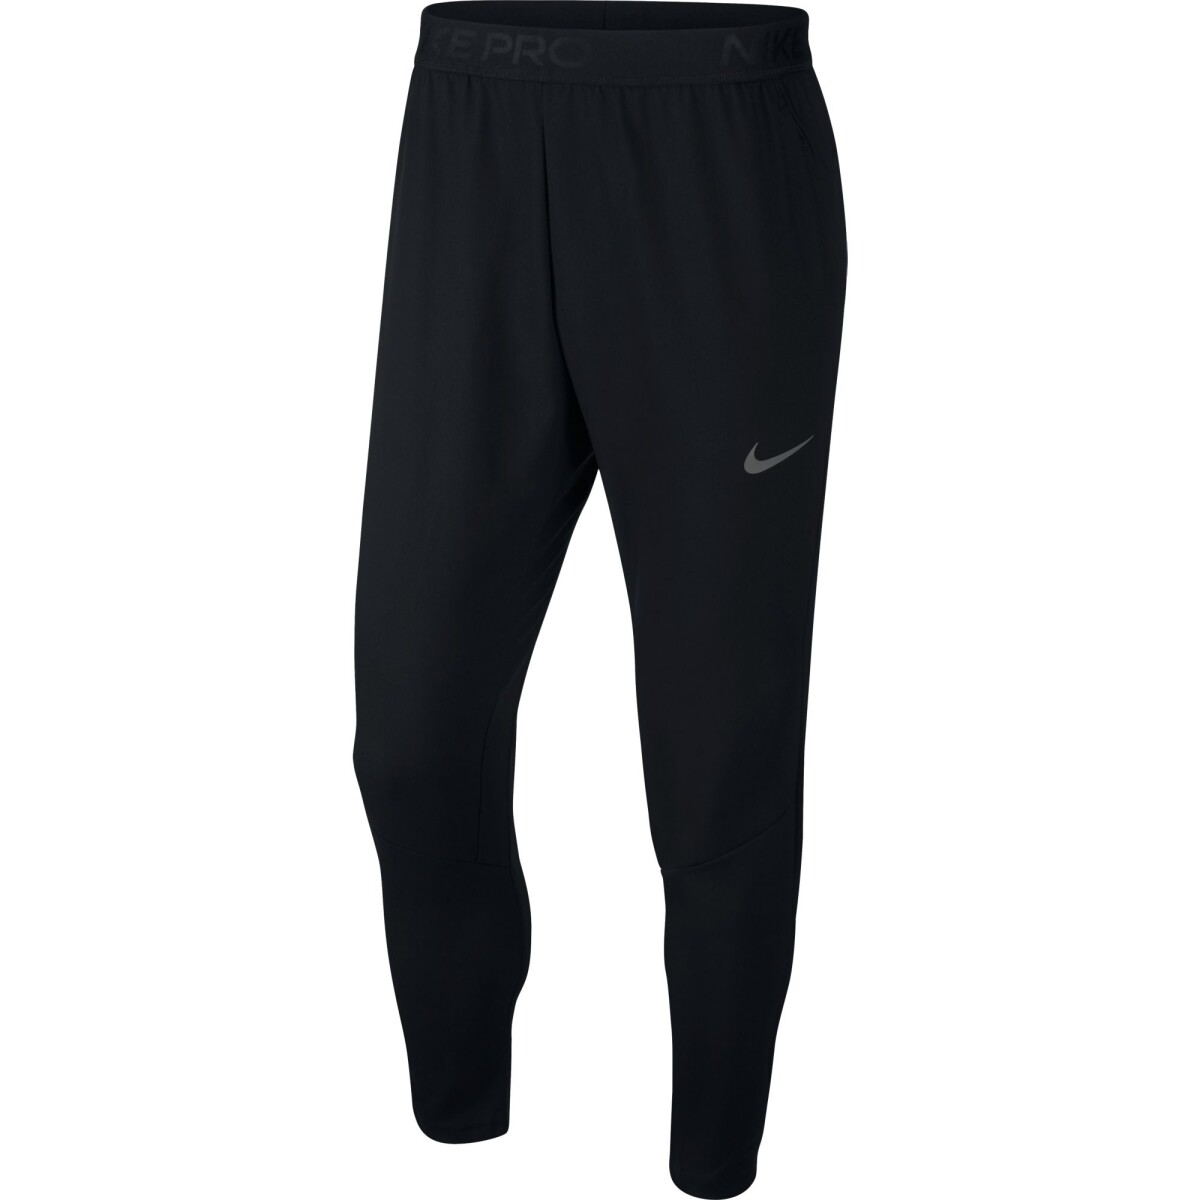 Pantalon Nike Traninig Hombre Df Flex Vent Max Pant Black - Color Único 